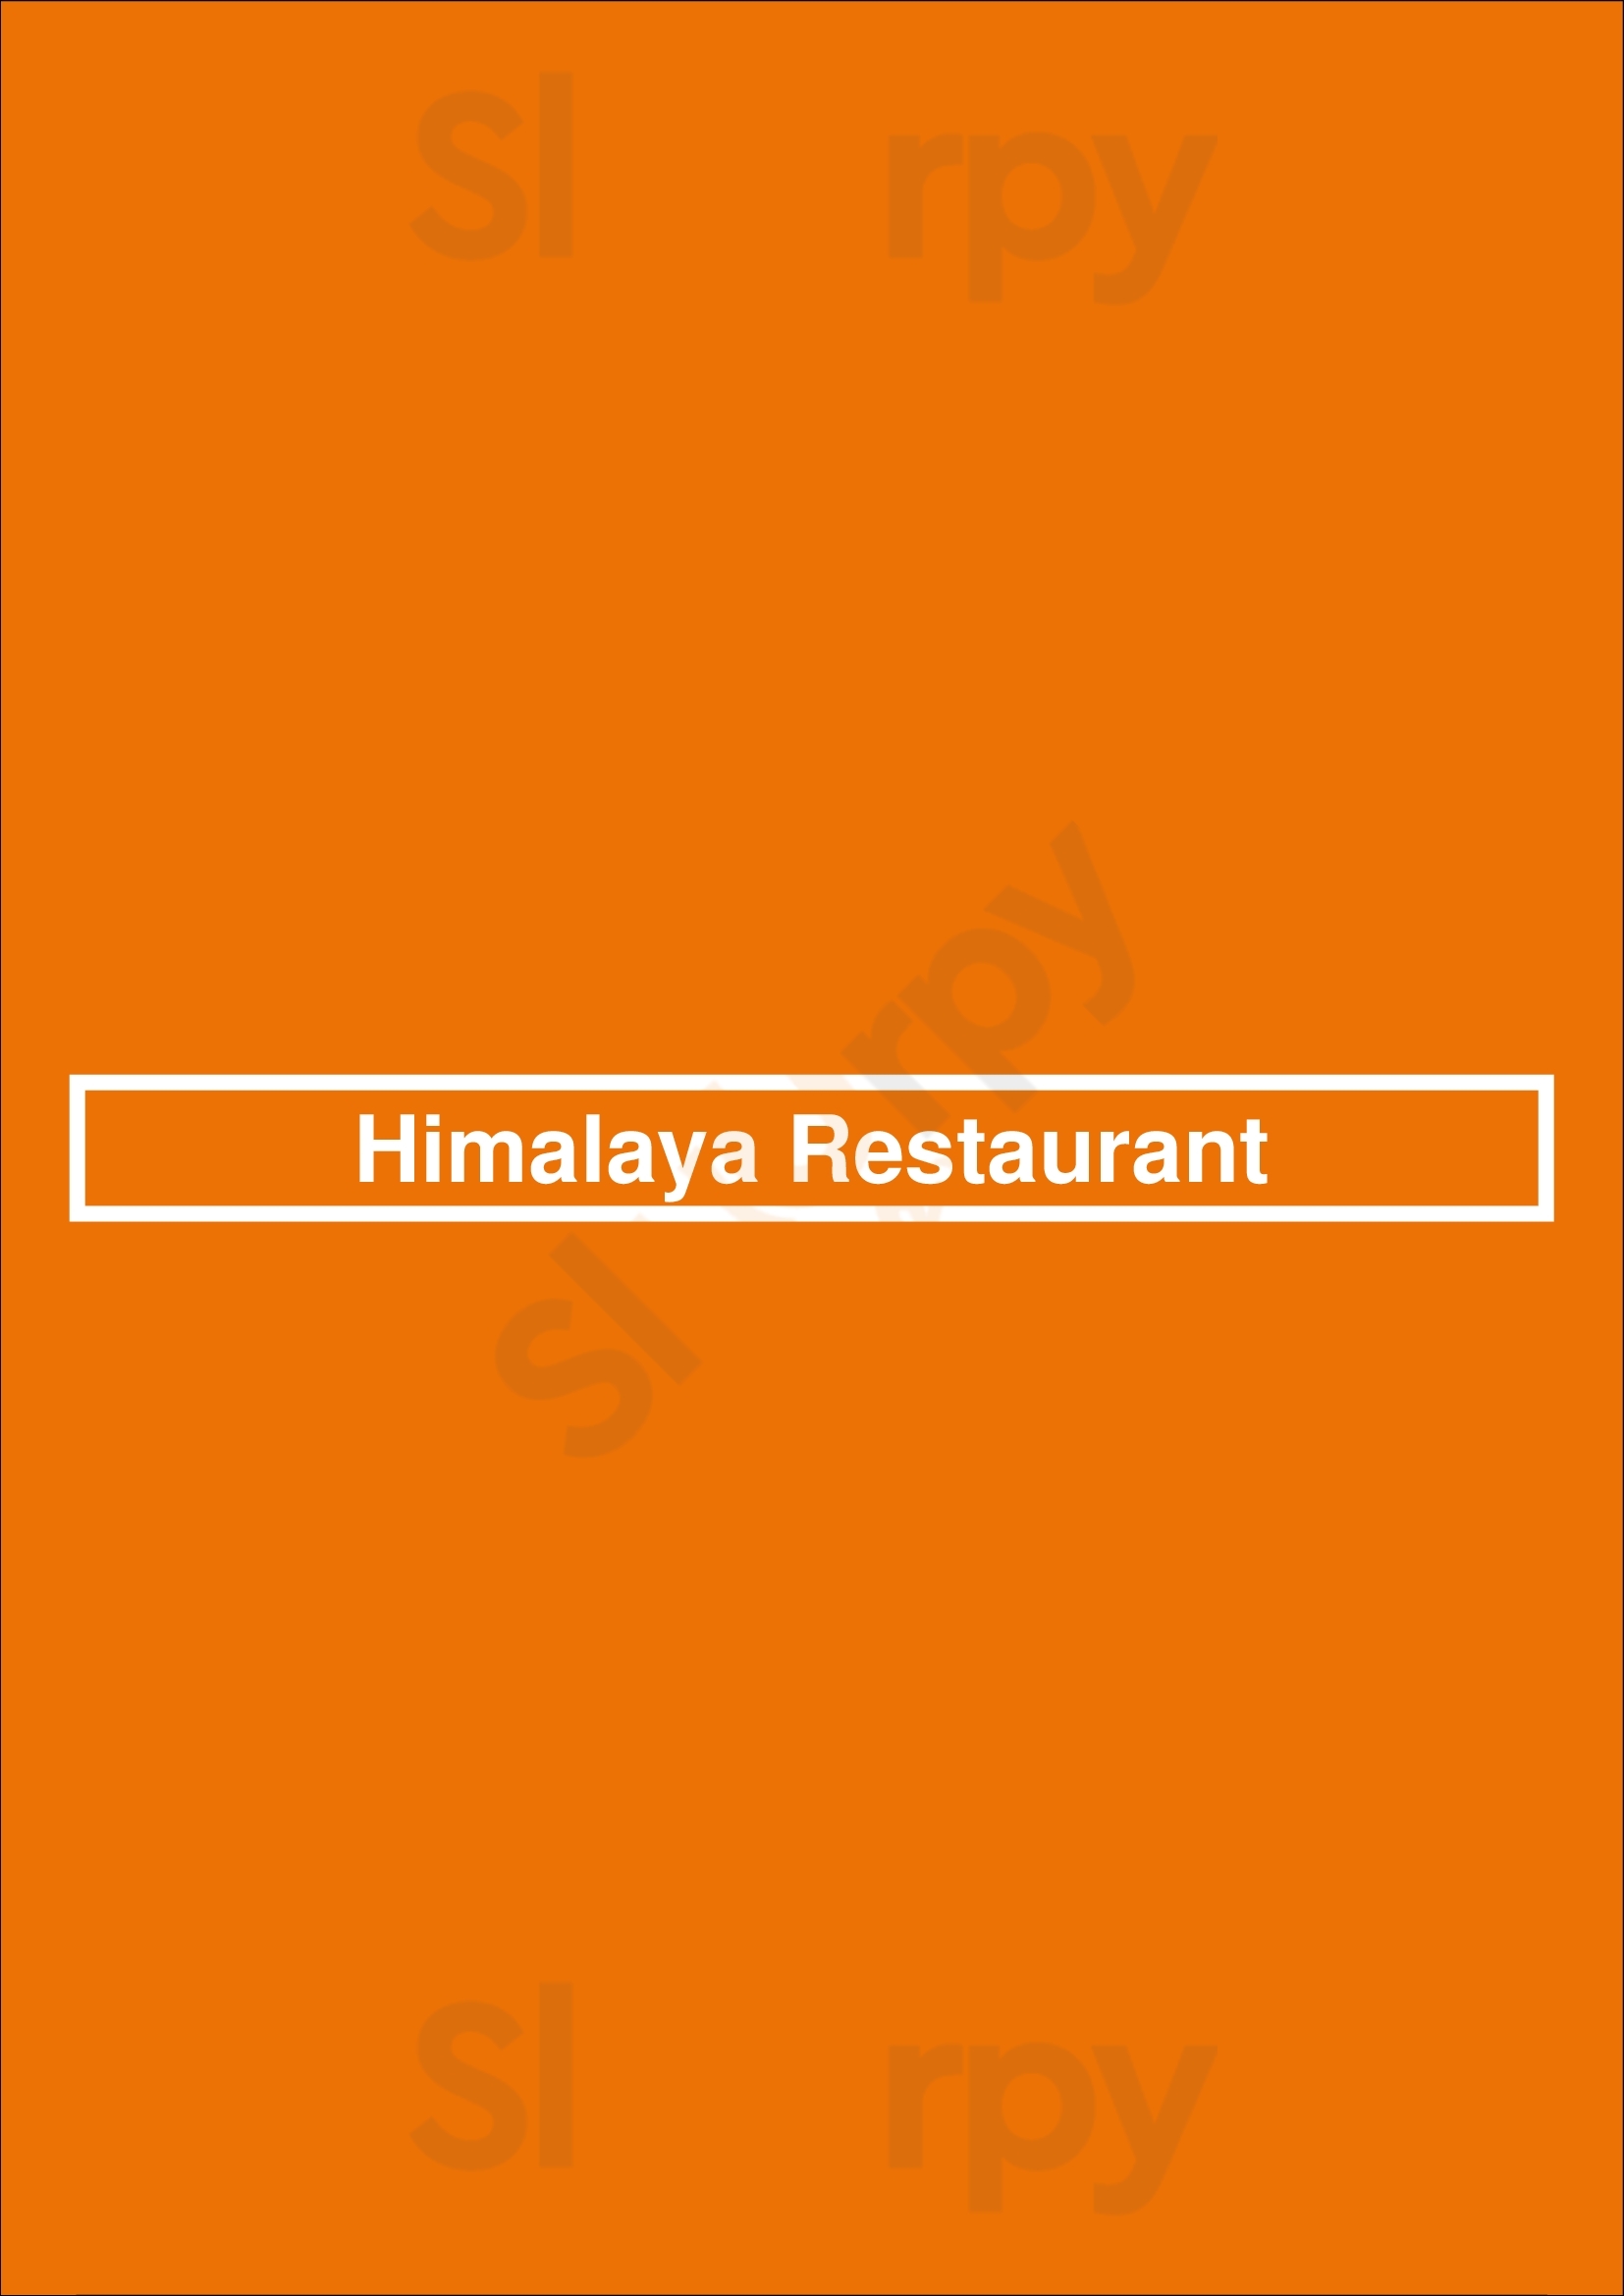 Himalaya Restaurant Hoorn Menu - 1